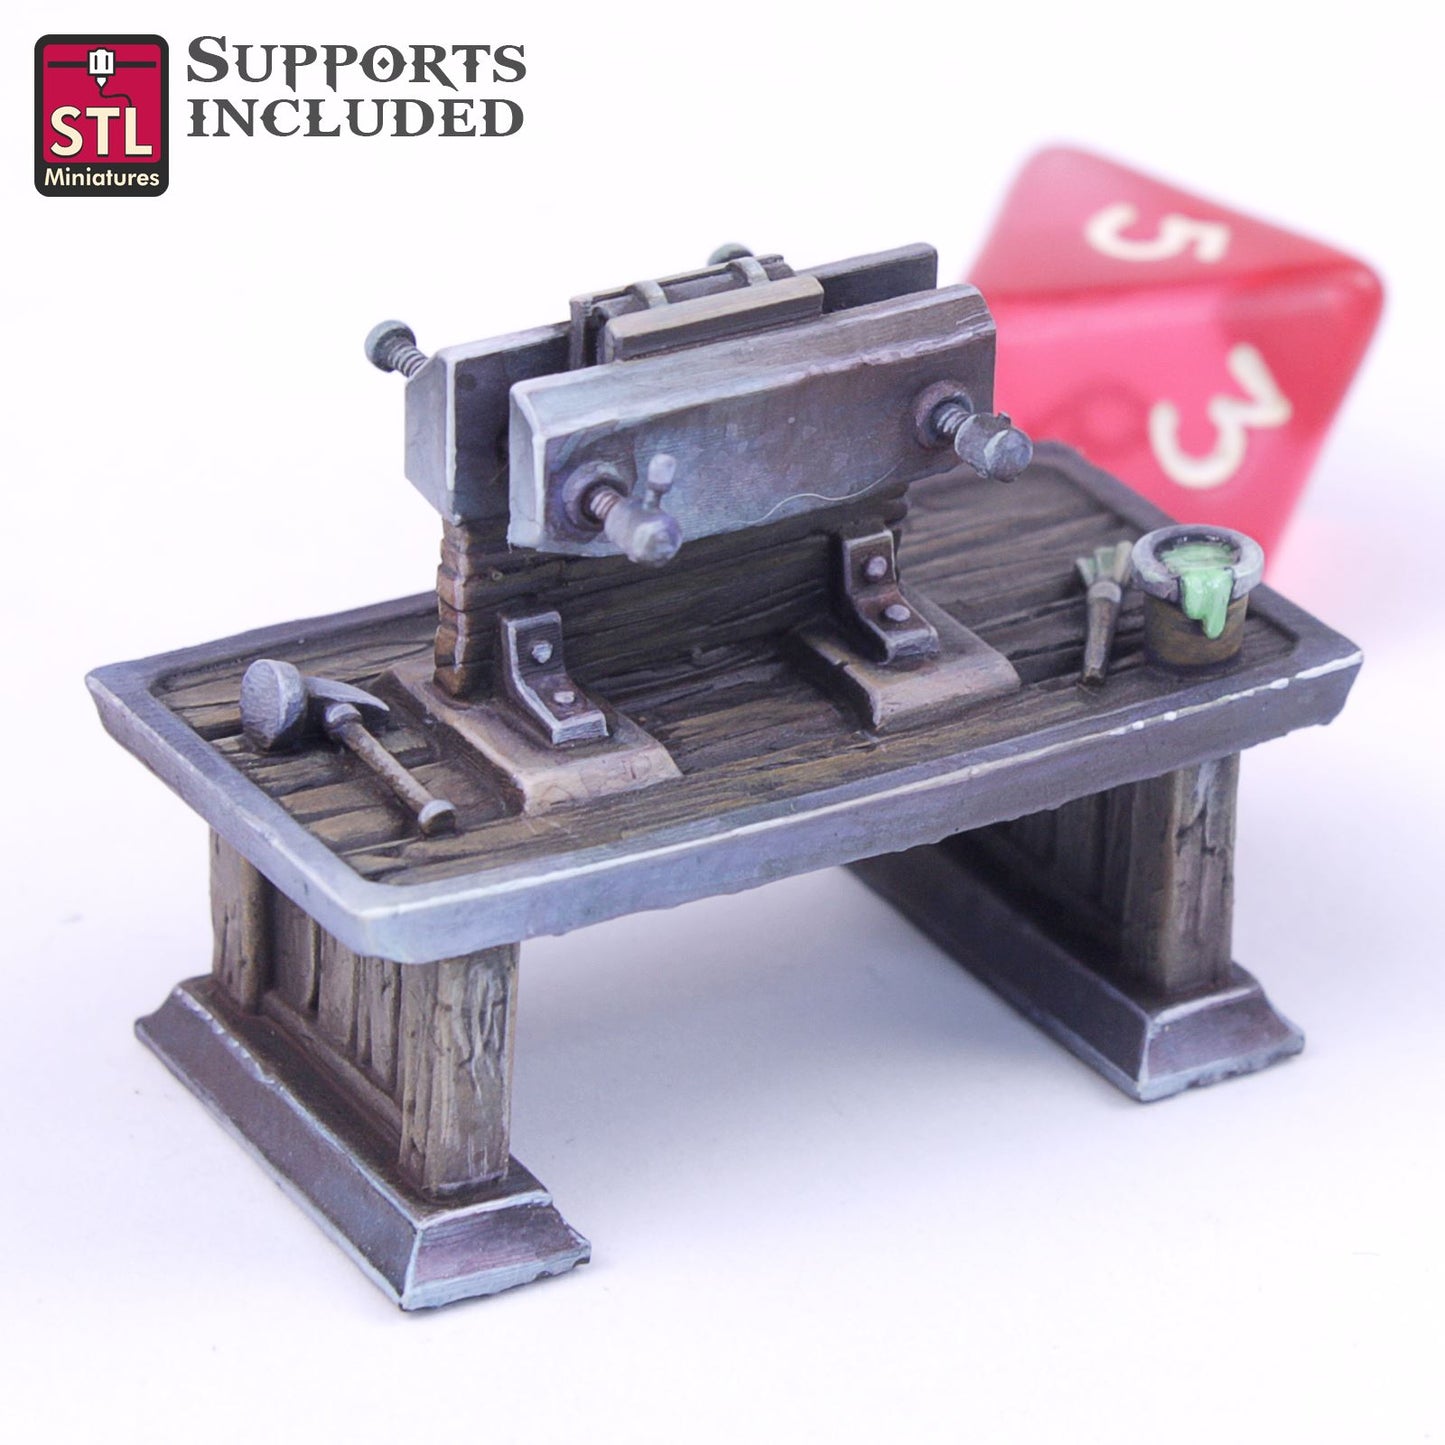 Bookbinder Set Printable 3D Model STLMiniatures